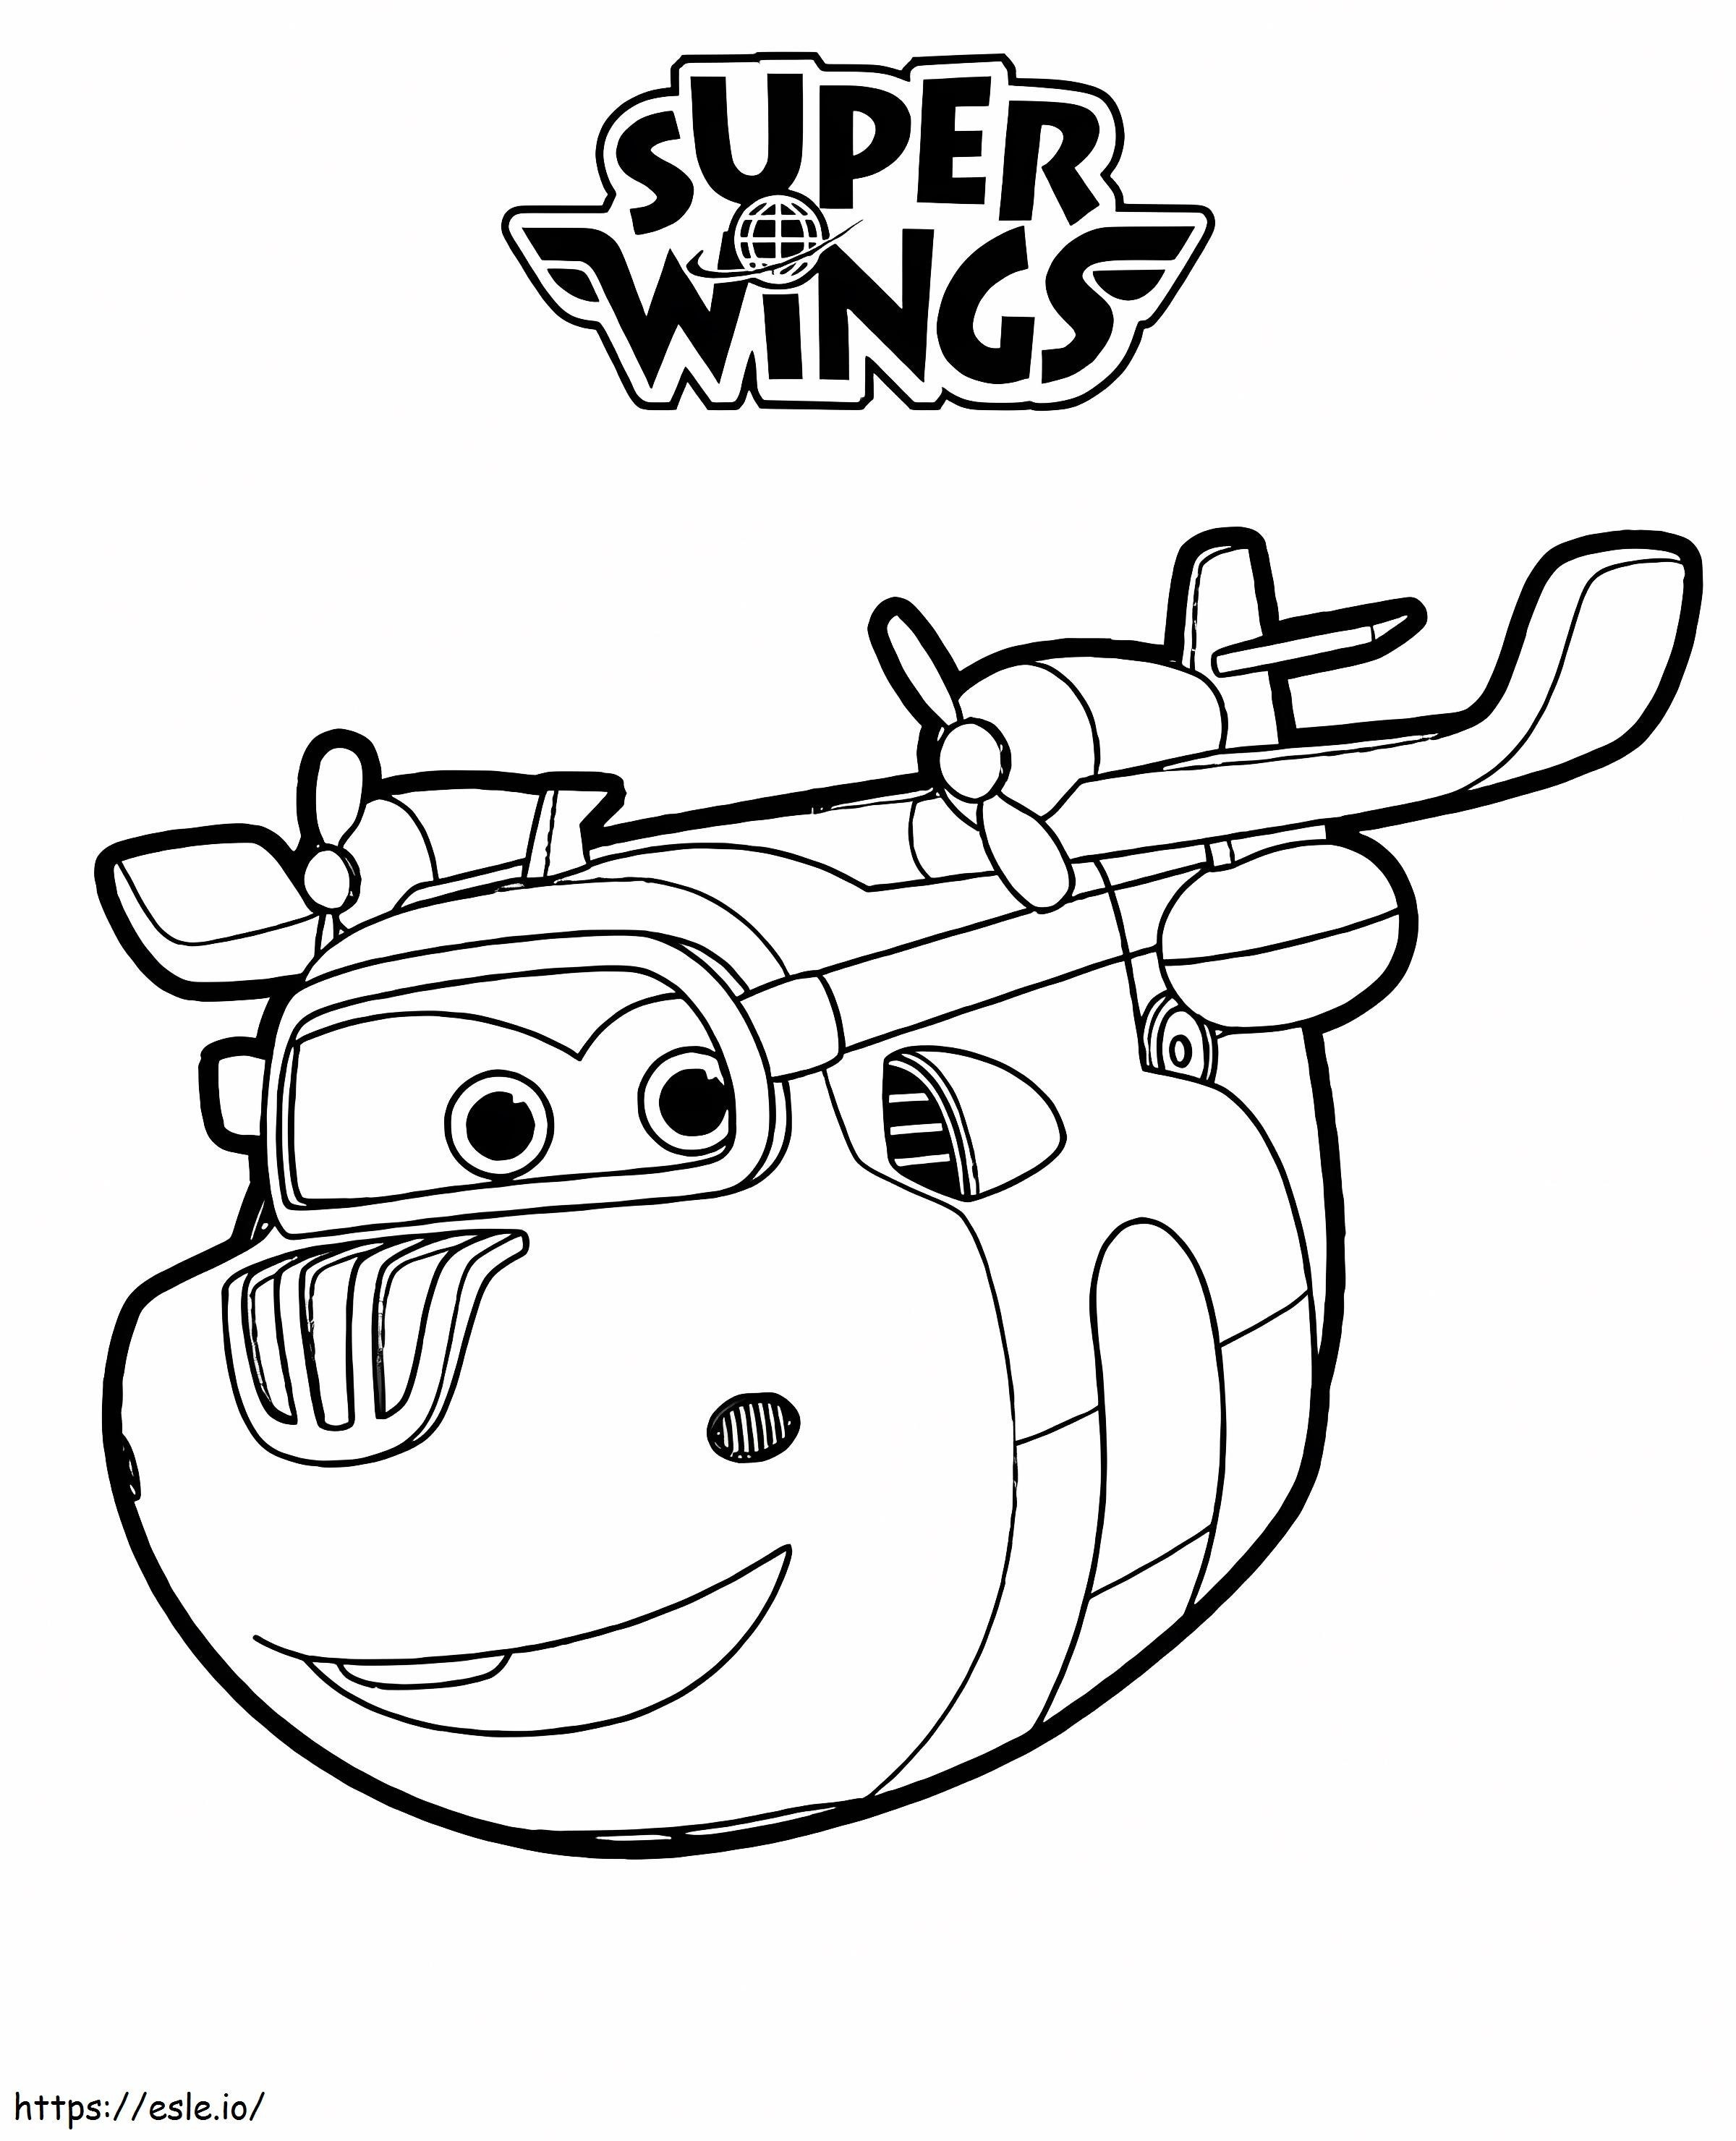 Donnie Super Wings 1 ausmalbilder